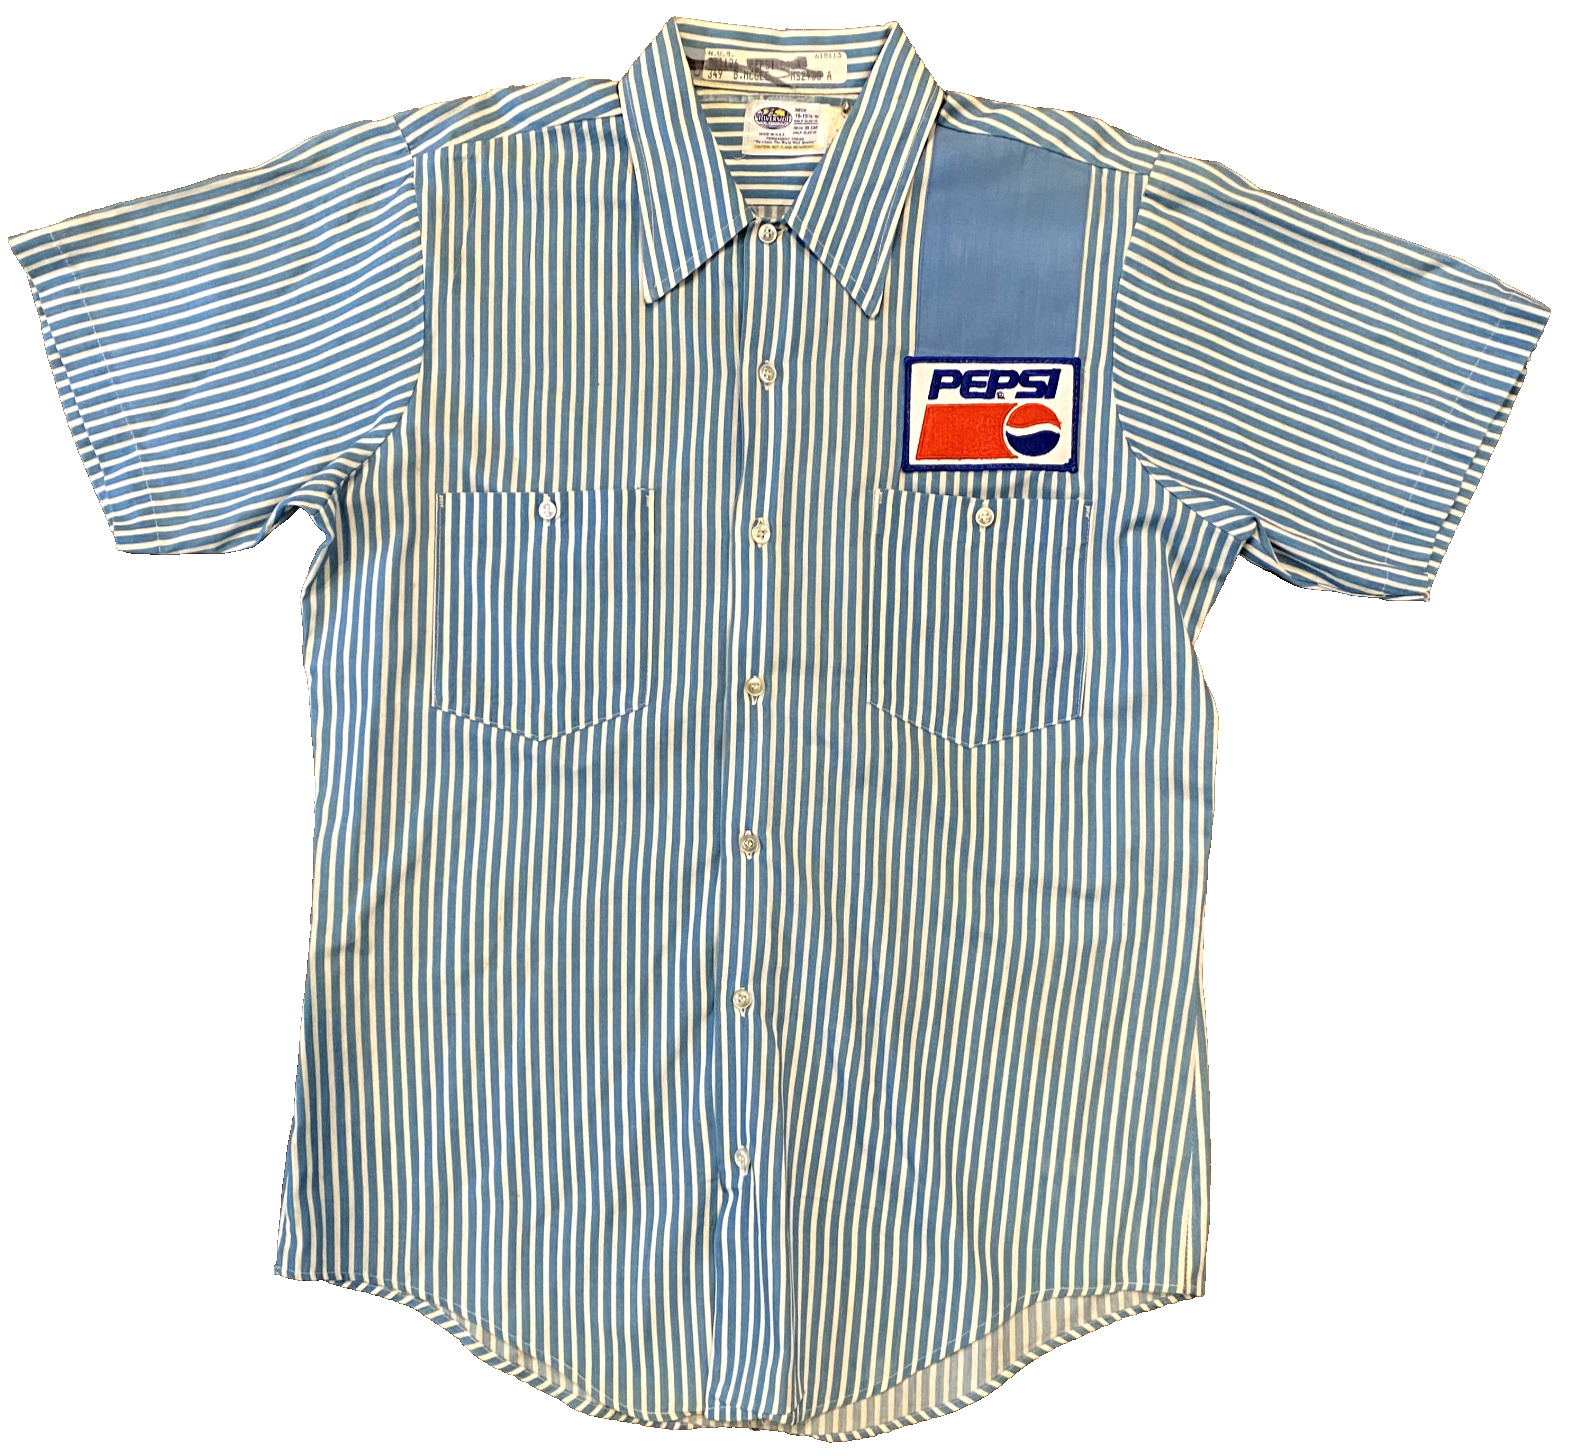 Vintage Riverside Pepsi Work Shirt Striped Button Pocket Employee Mens Patch